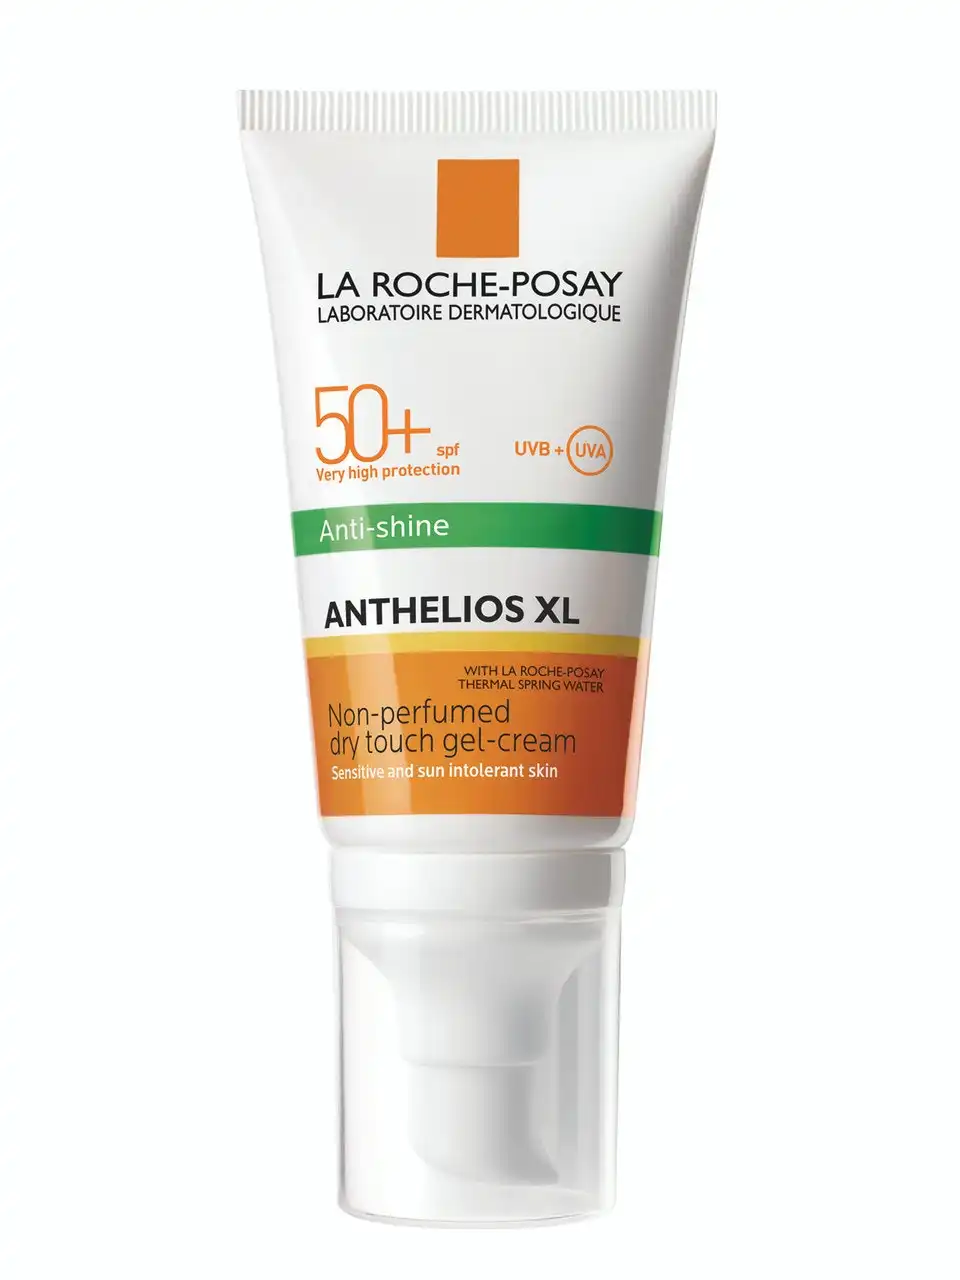 Anthelios XL Anti-Shine Dry Touch Facial Sunscreen SPF50+ 50mL